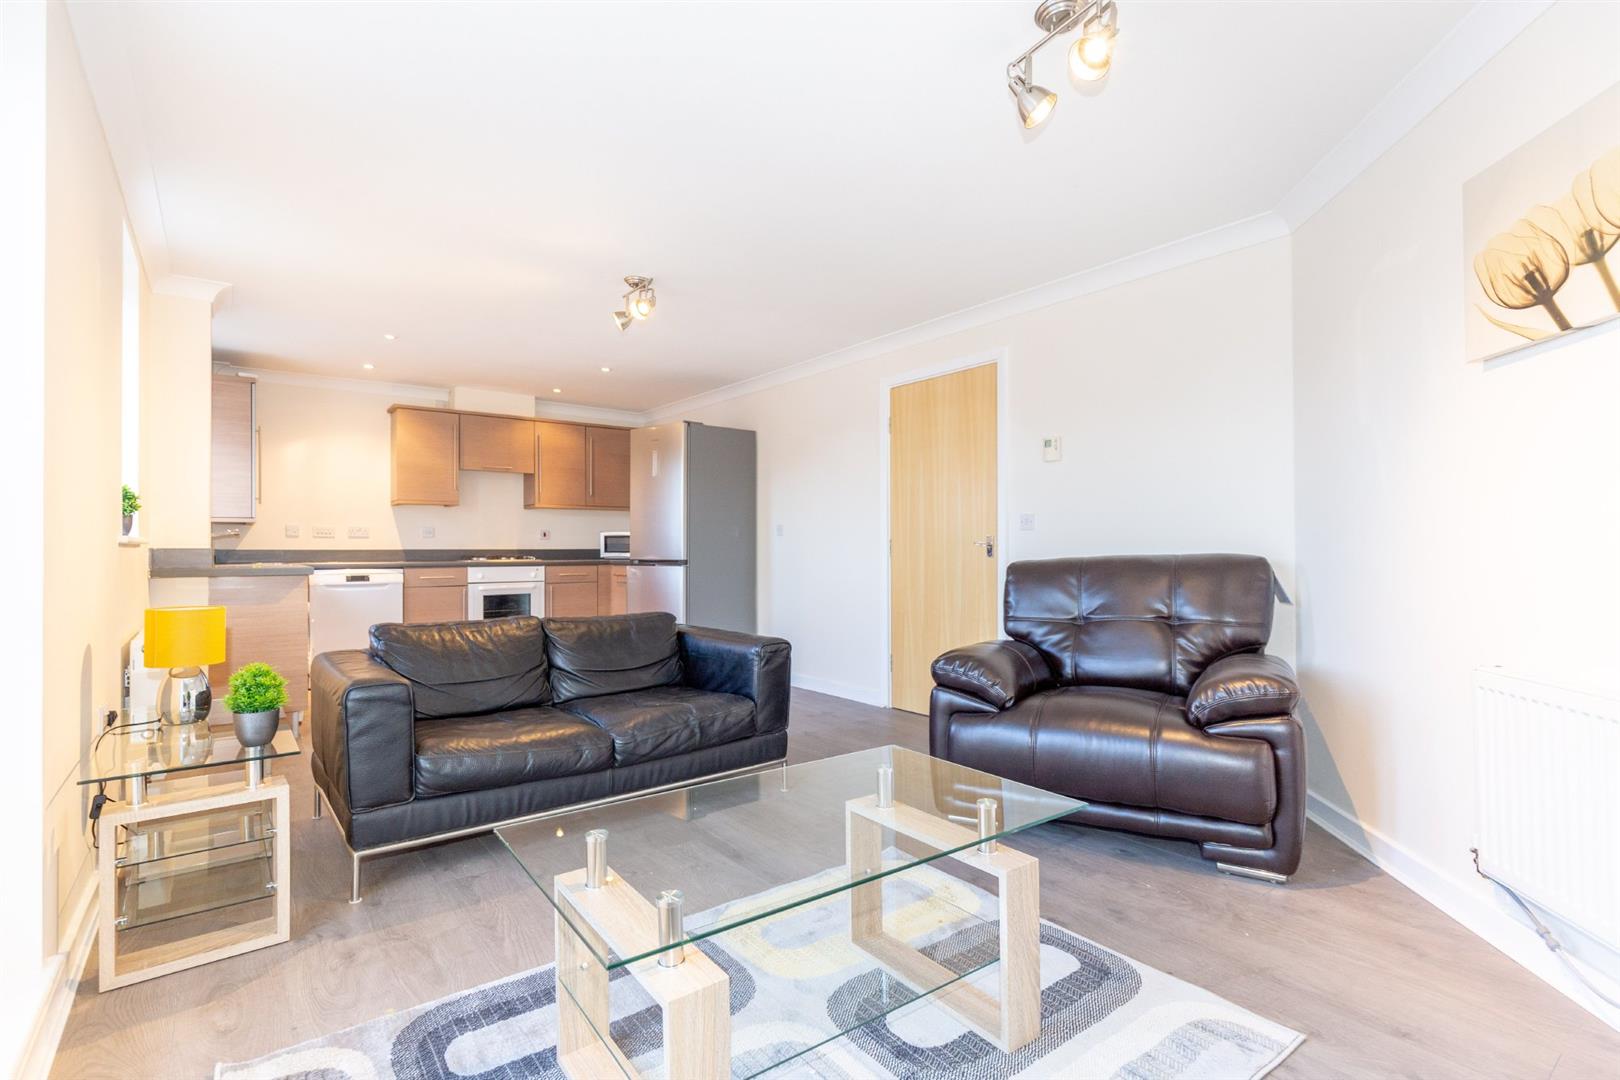 2 bed apartment to rent in Chillingham Road, Heaton, NE6 